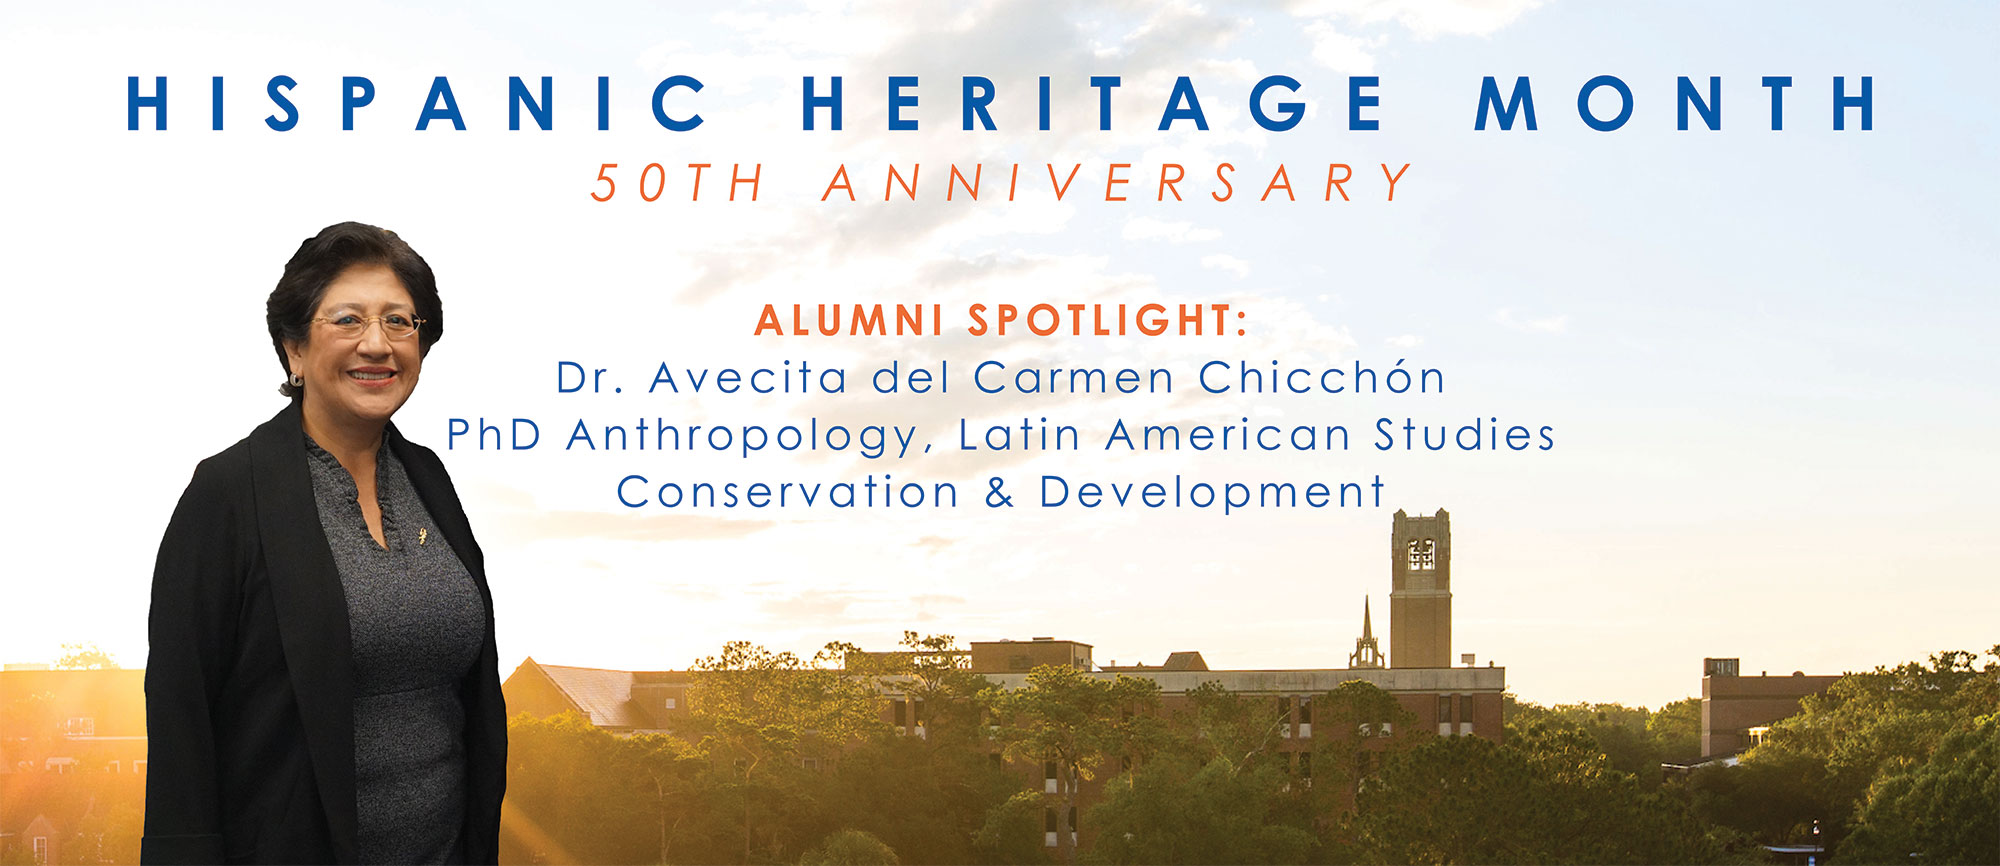 Hispanic Heritage Month Alumni Spotlight Dr. Avecita del Carmen Chicchon